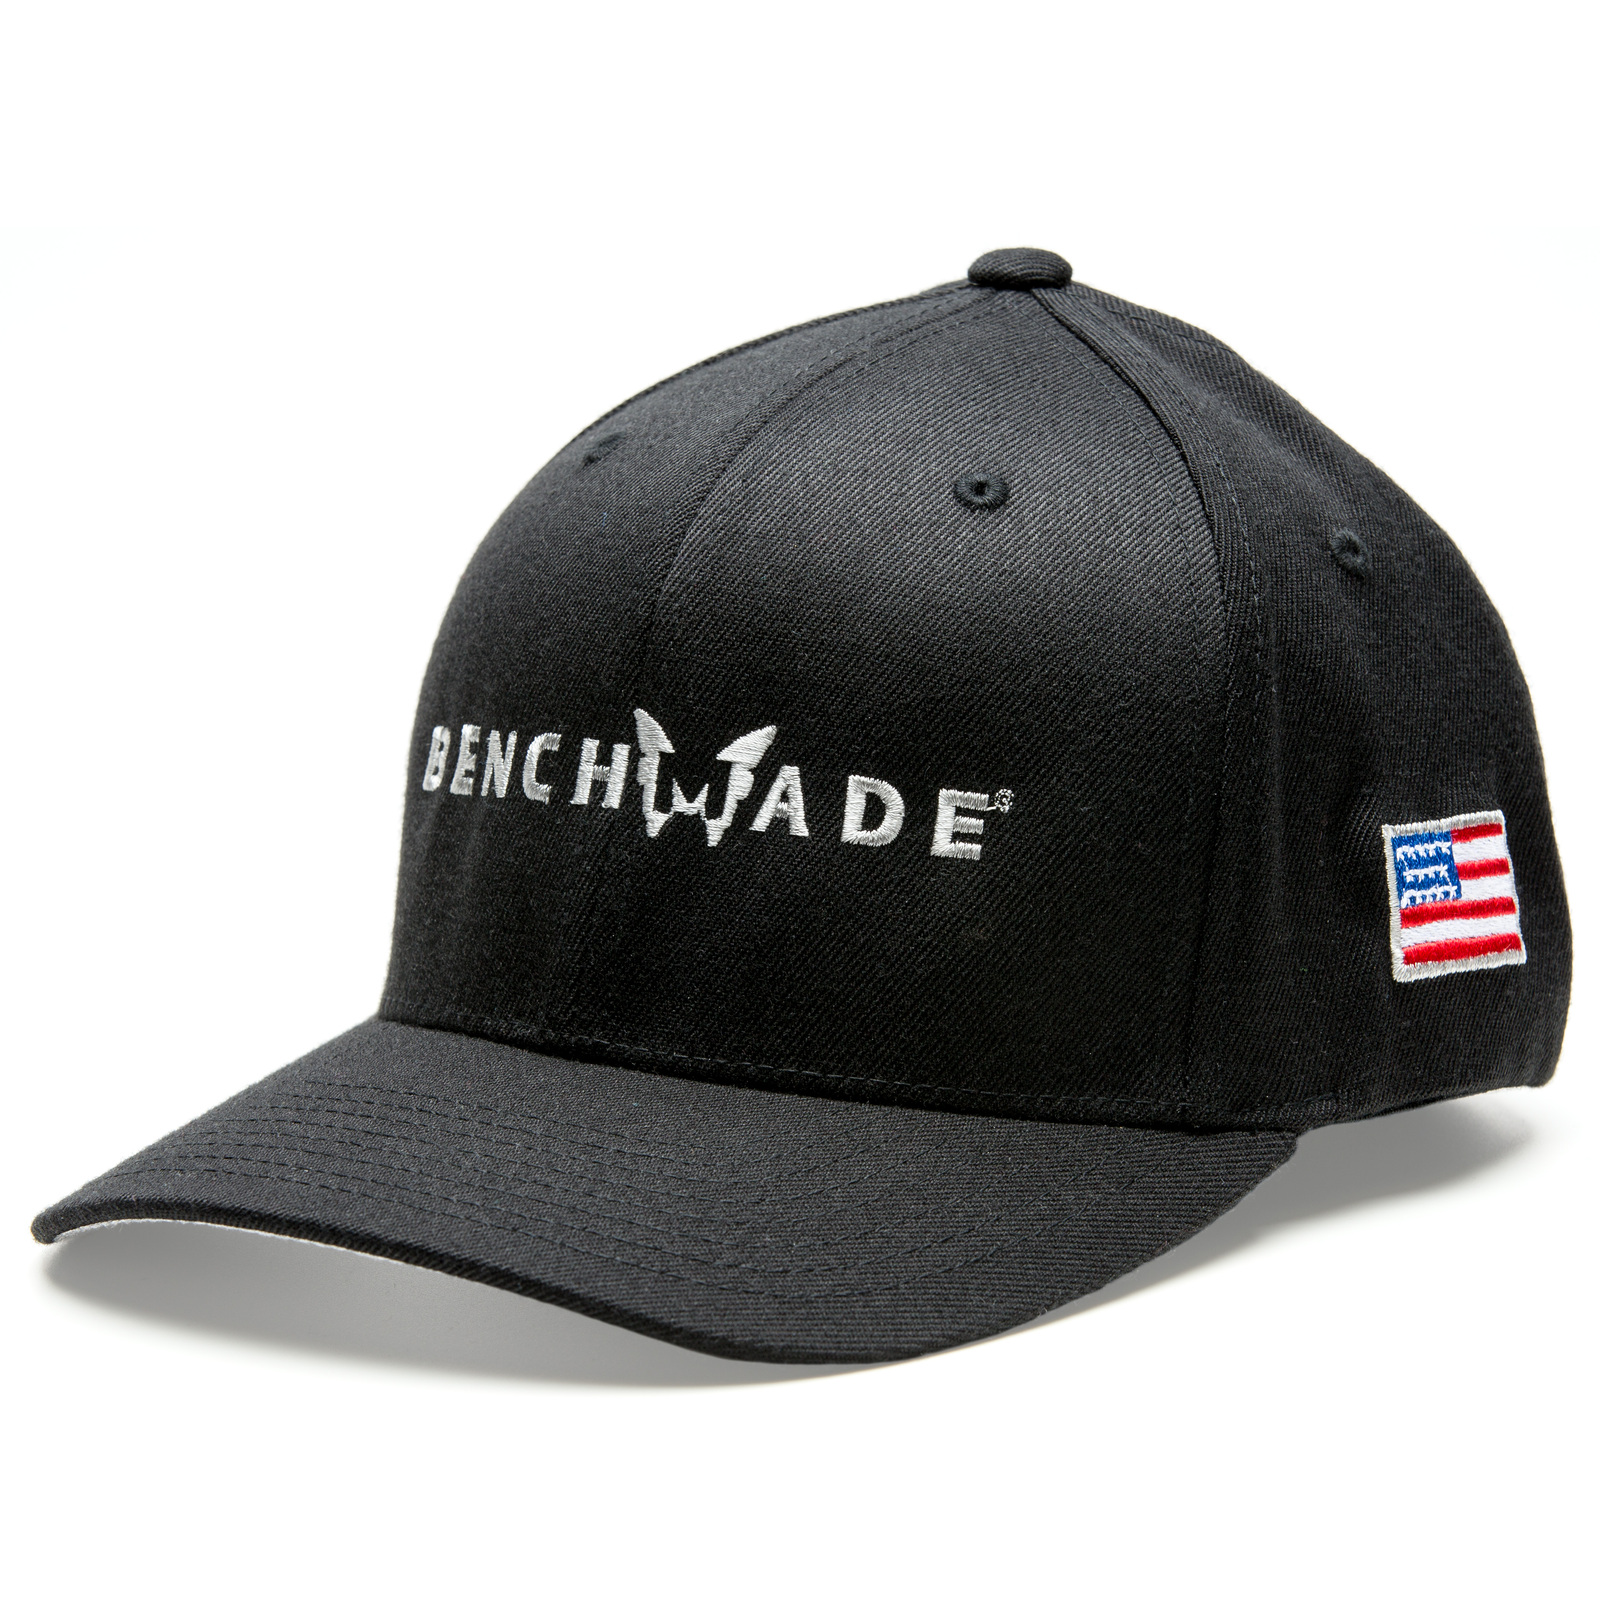 Benchmade Logo Black hat